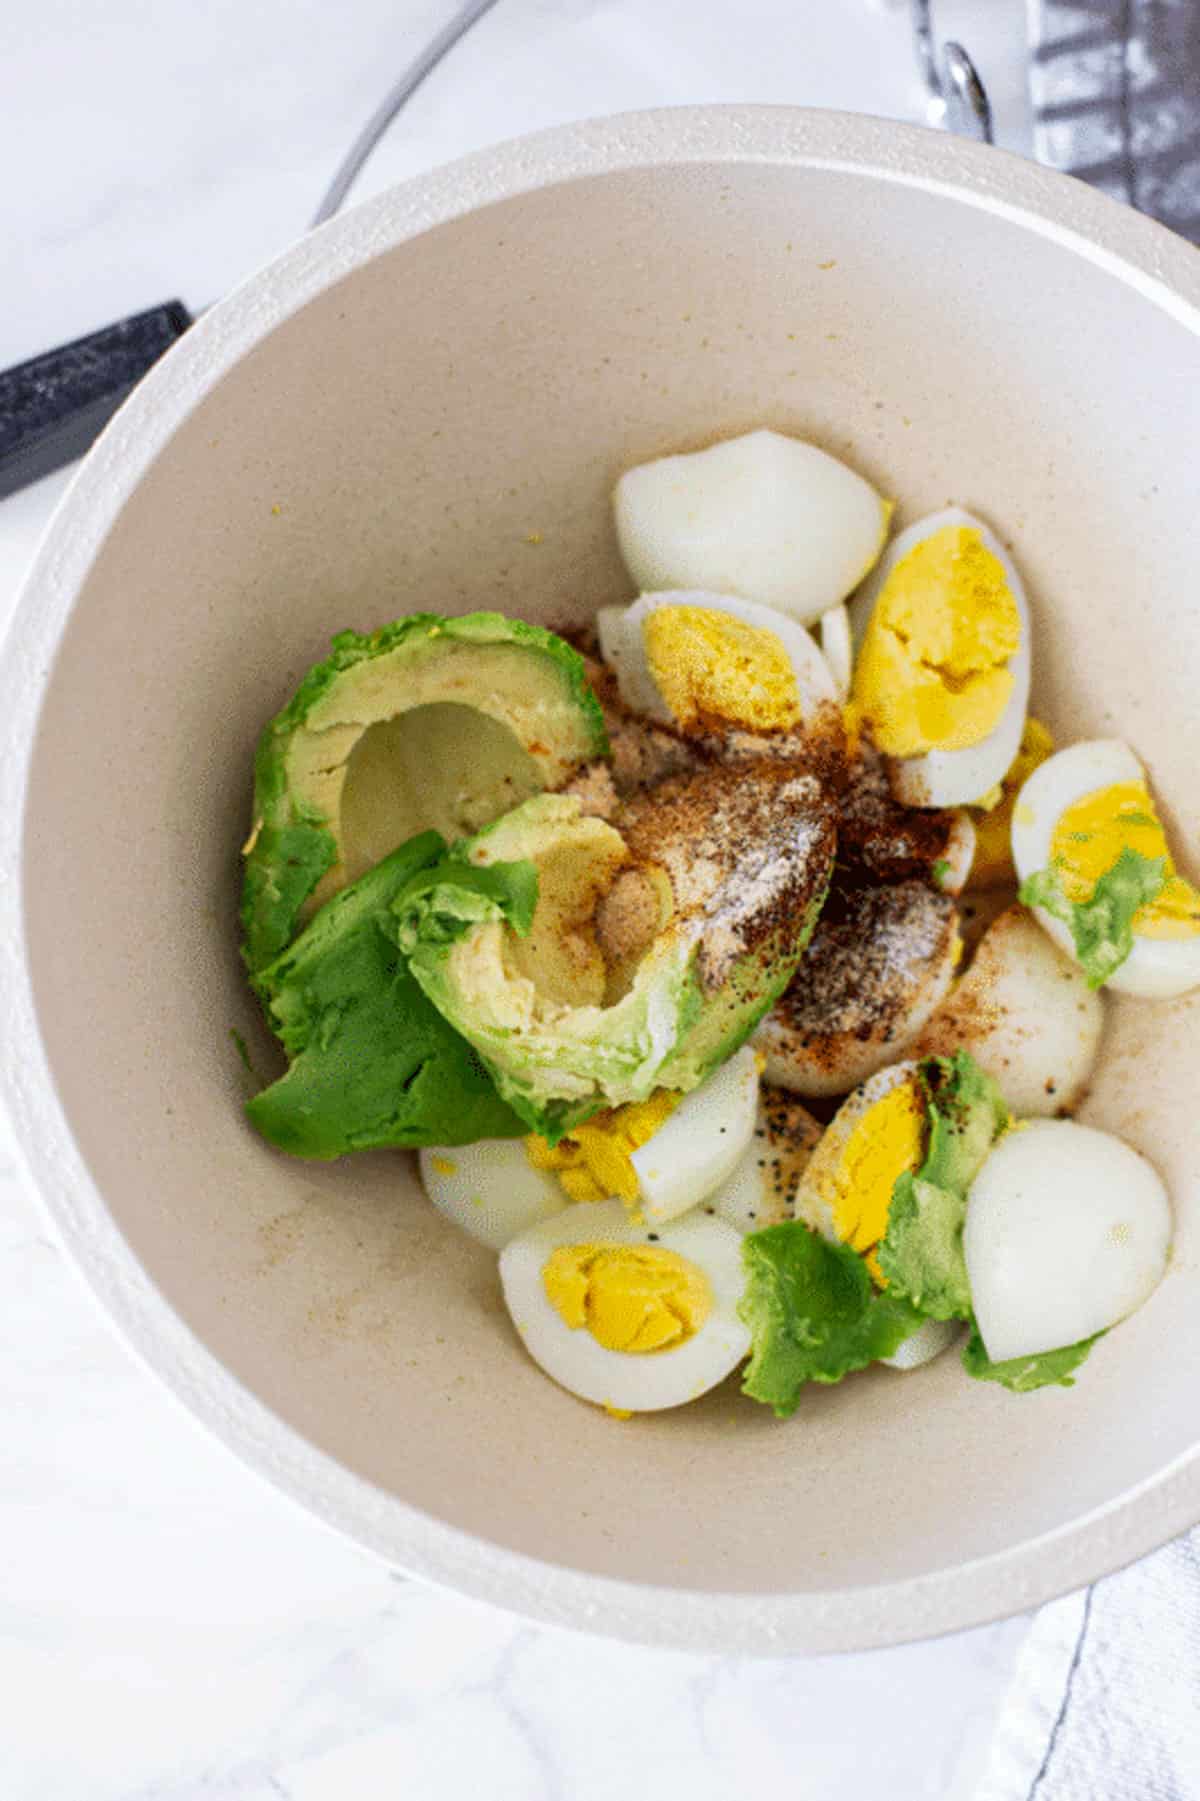 Avocado, eggs and spices in a bowl for Avocado Egg Salad.